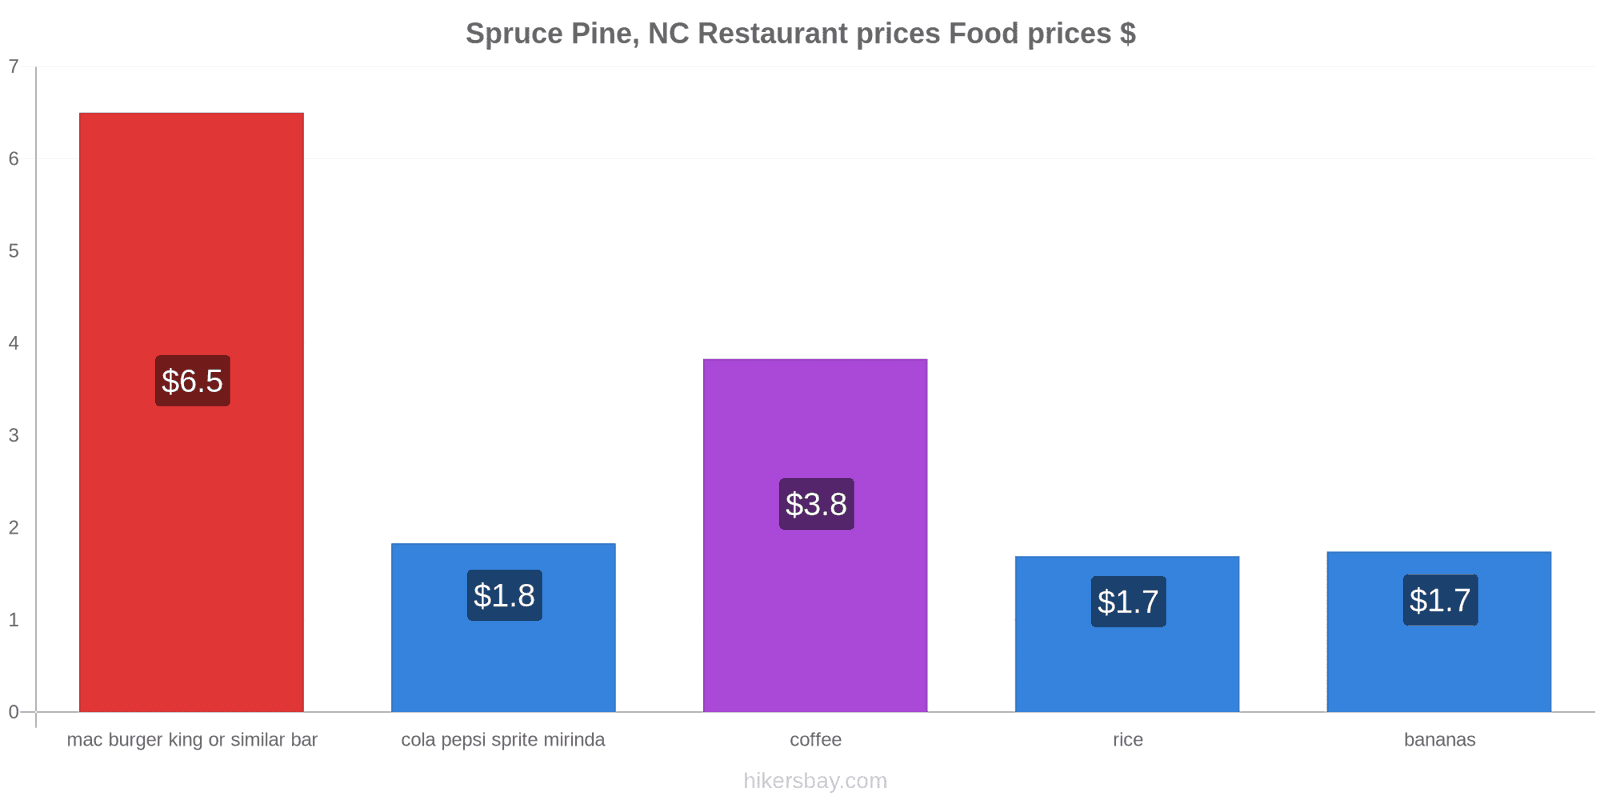 Spruce Pine, NC price changes hikersbay.com